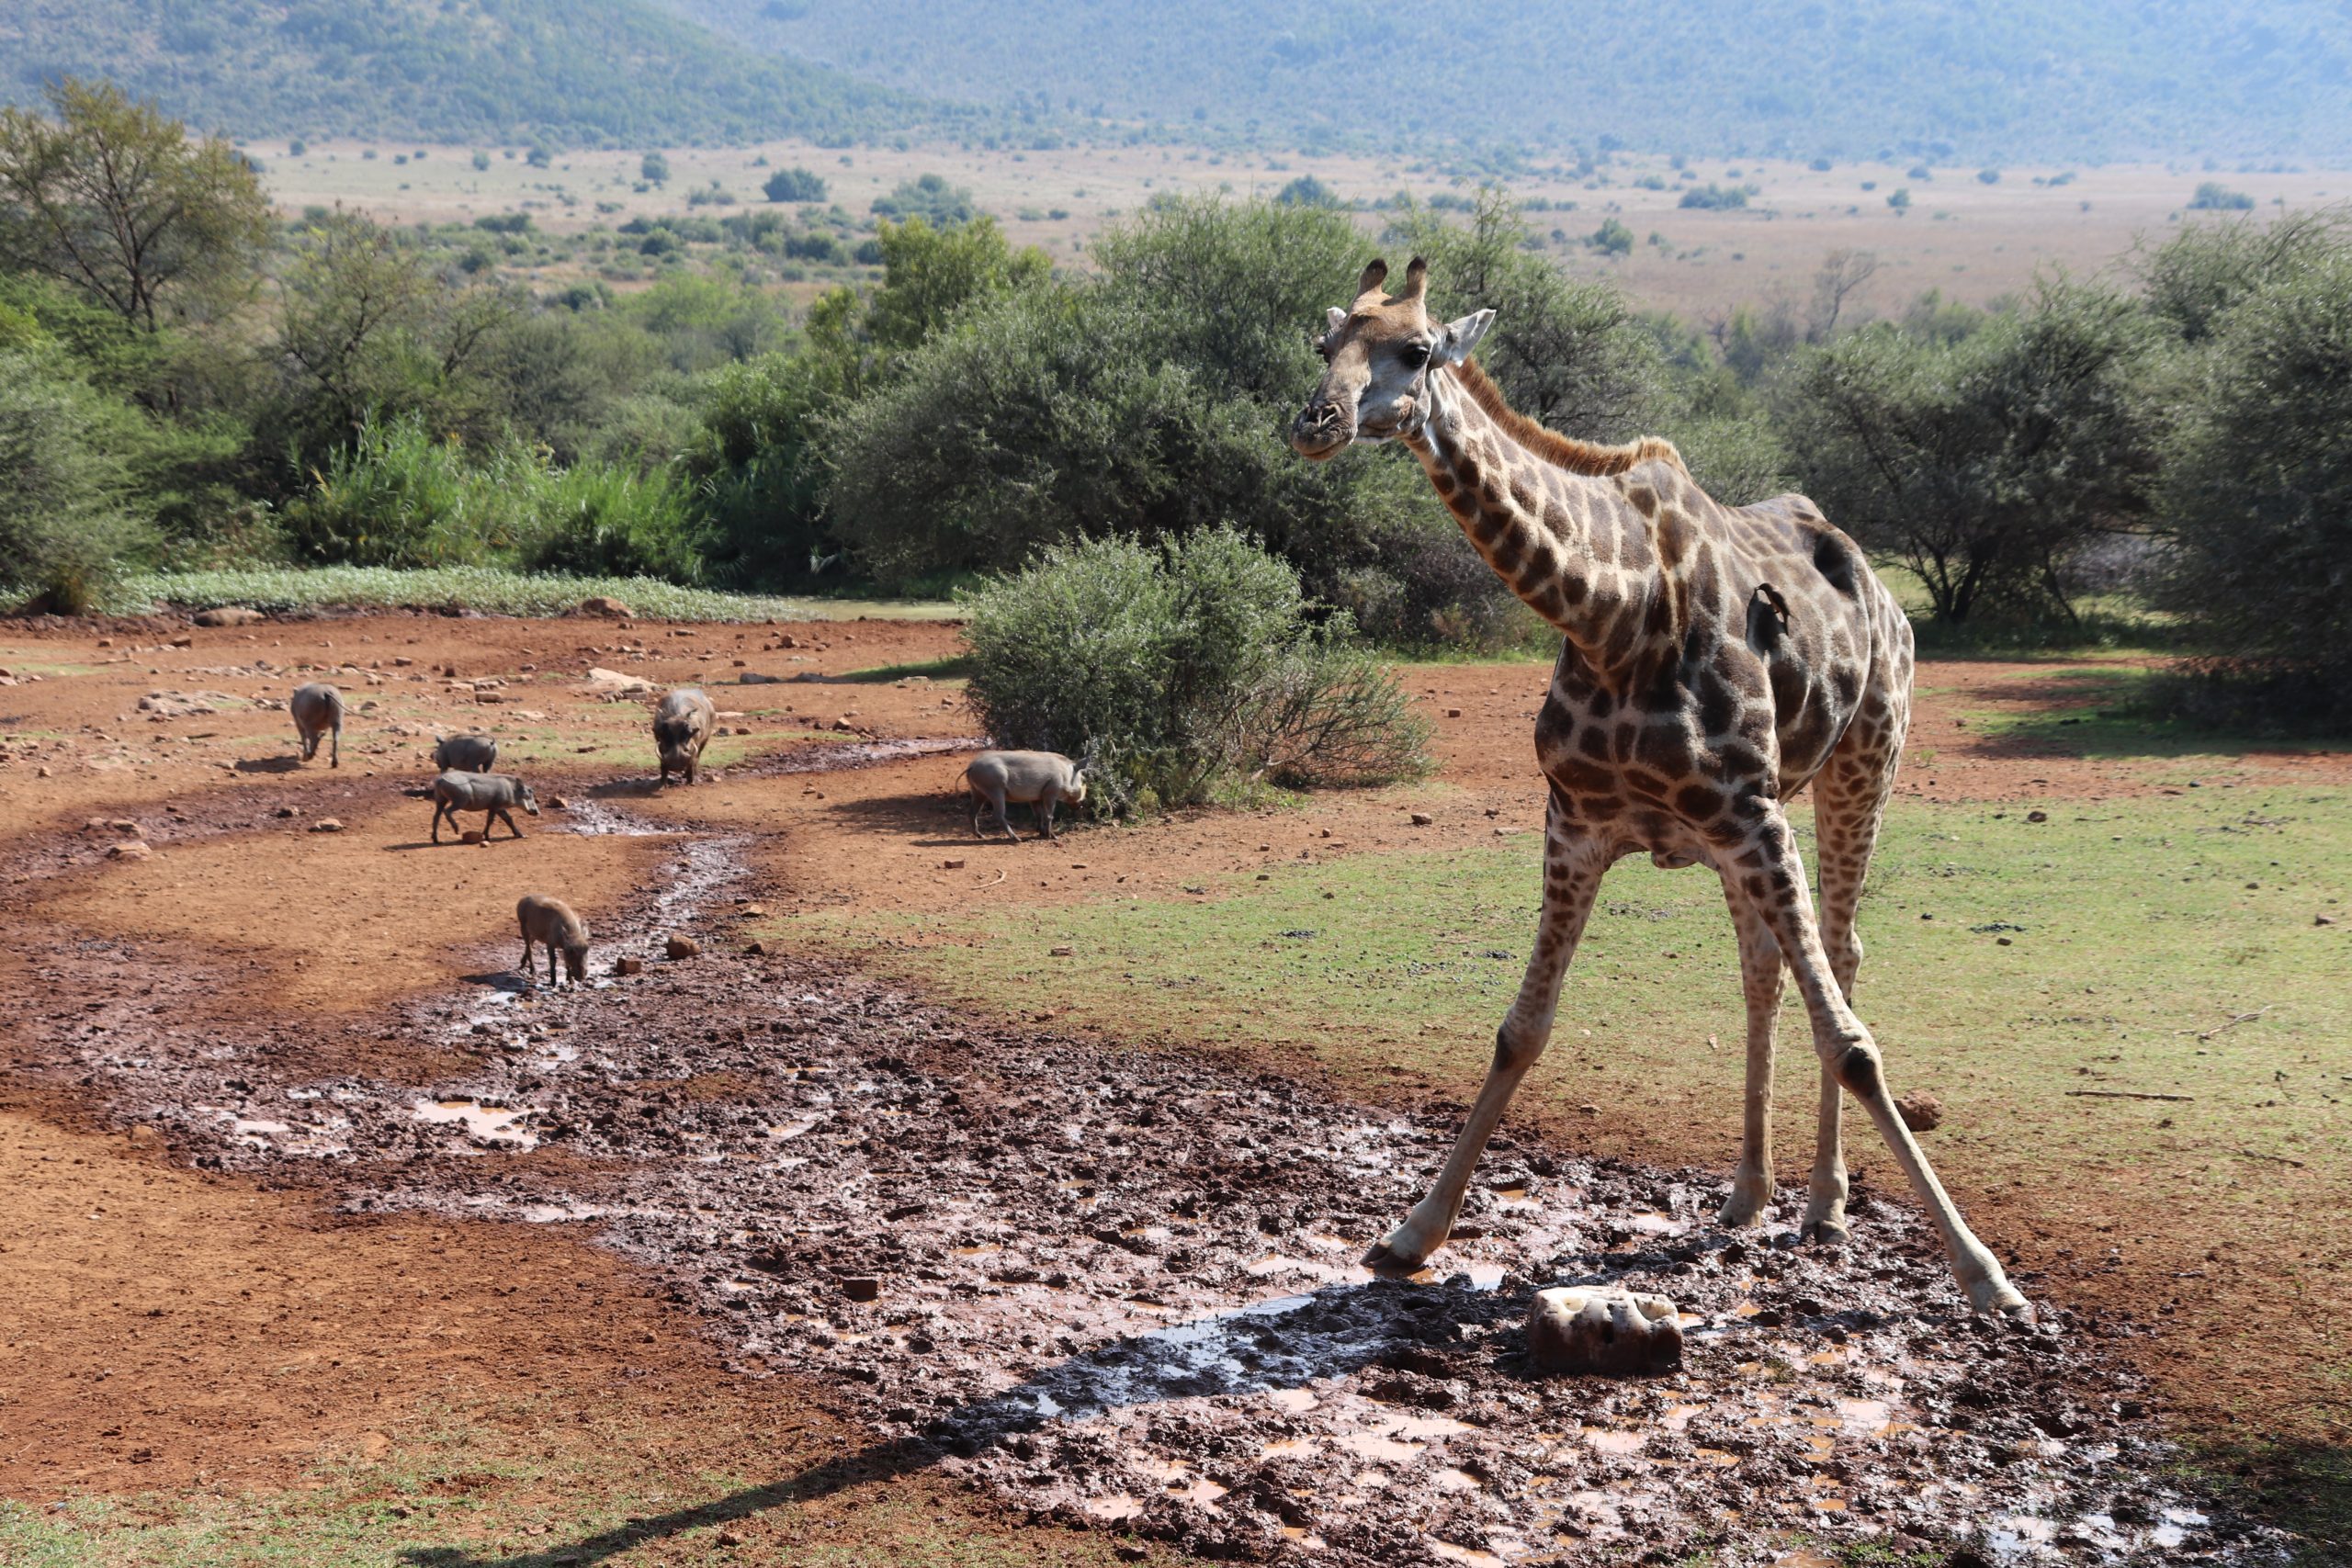 Pilanesberg giraffe